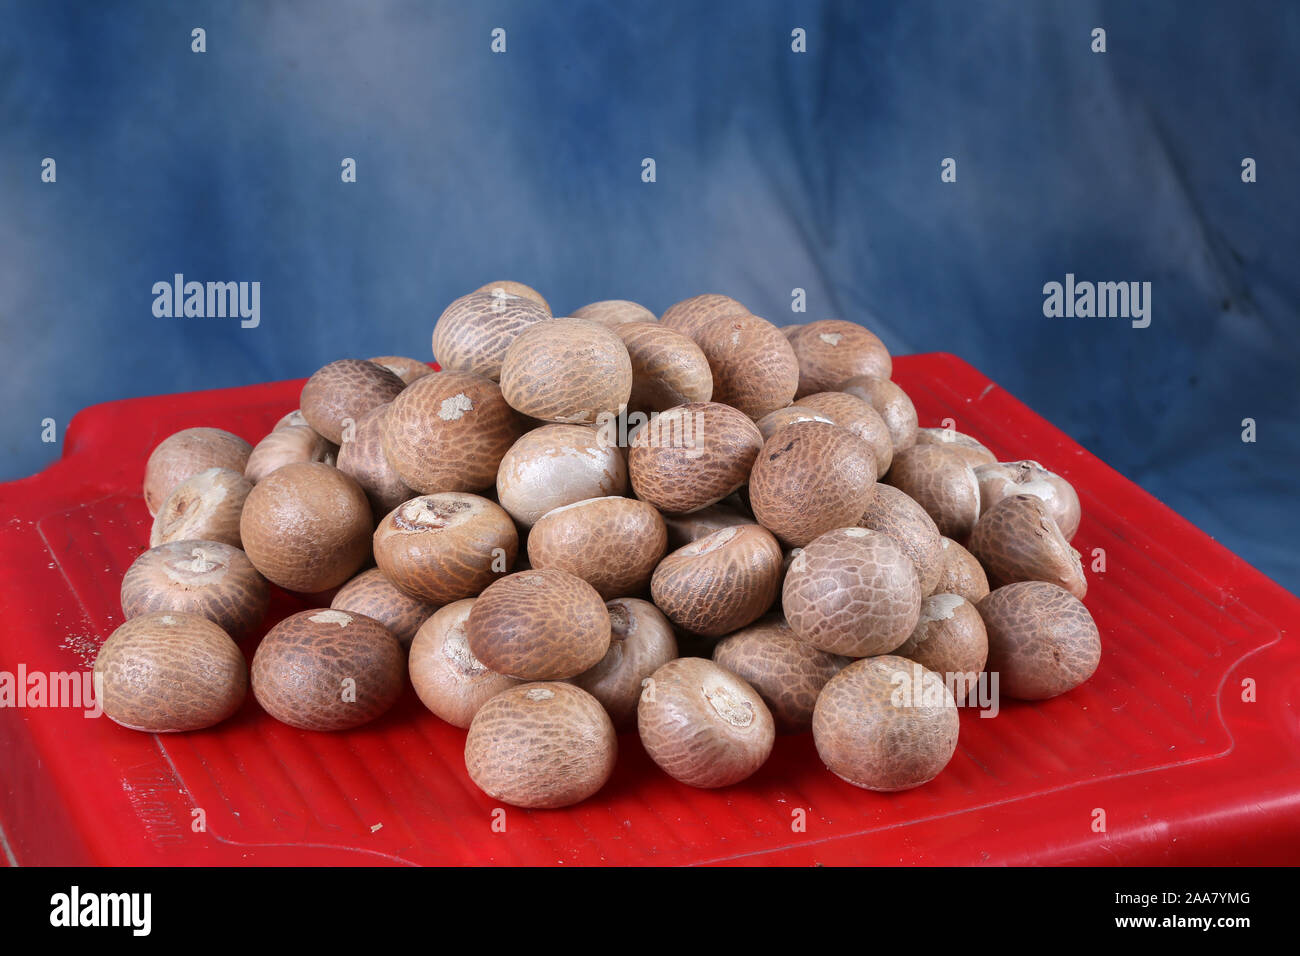 betel nut supari cut finely cut for sale in super market - Image Stock Photo